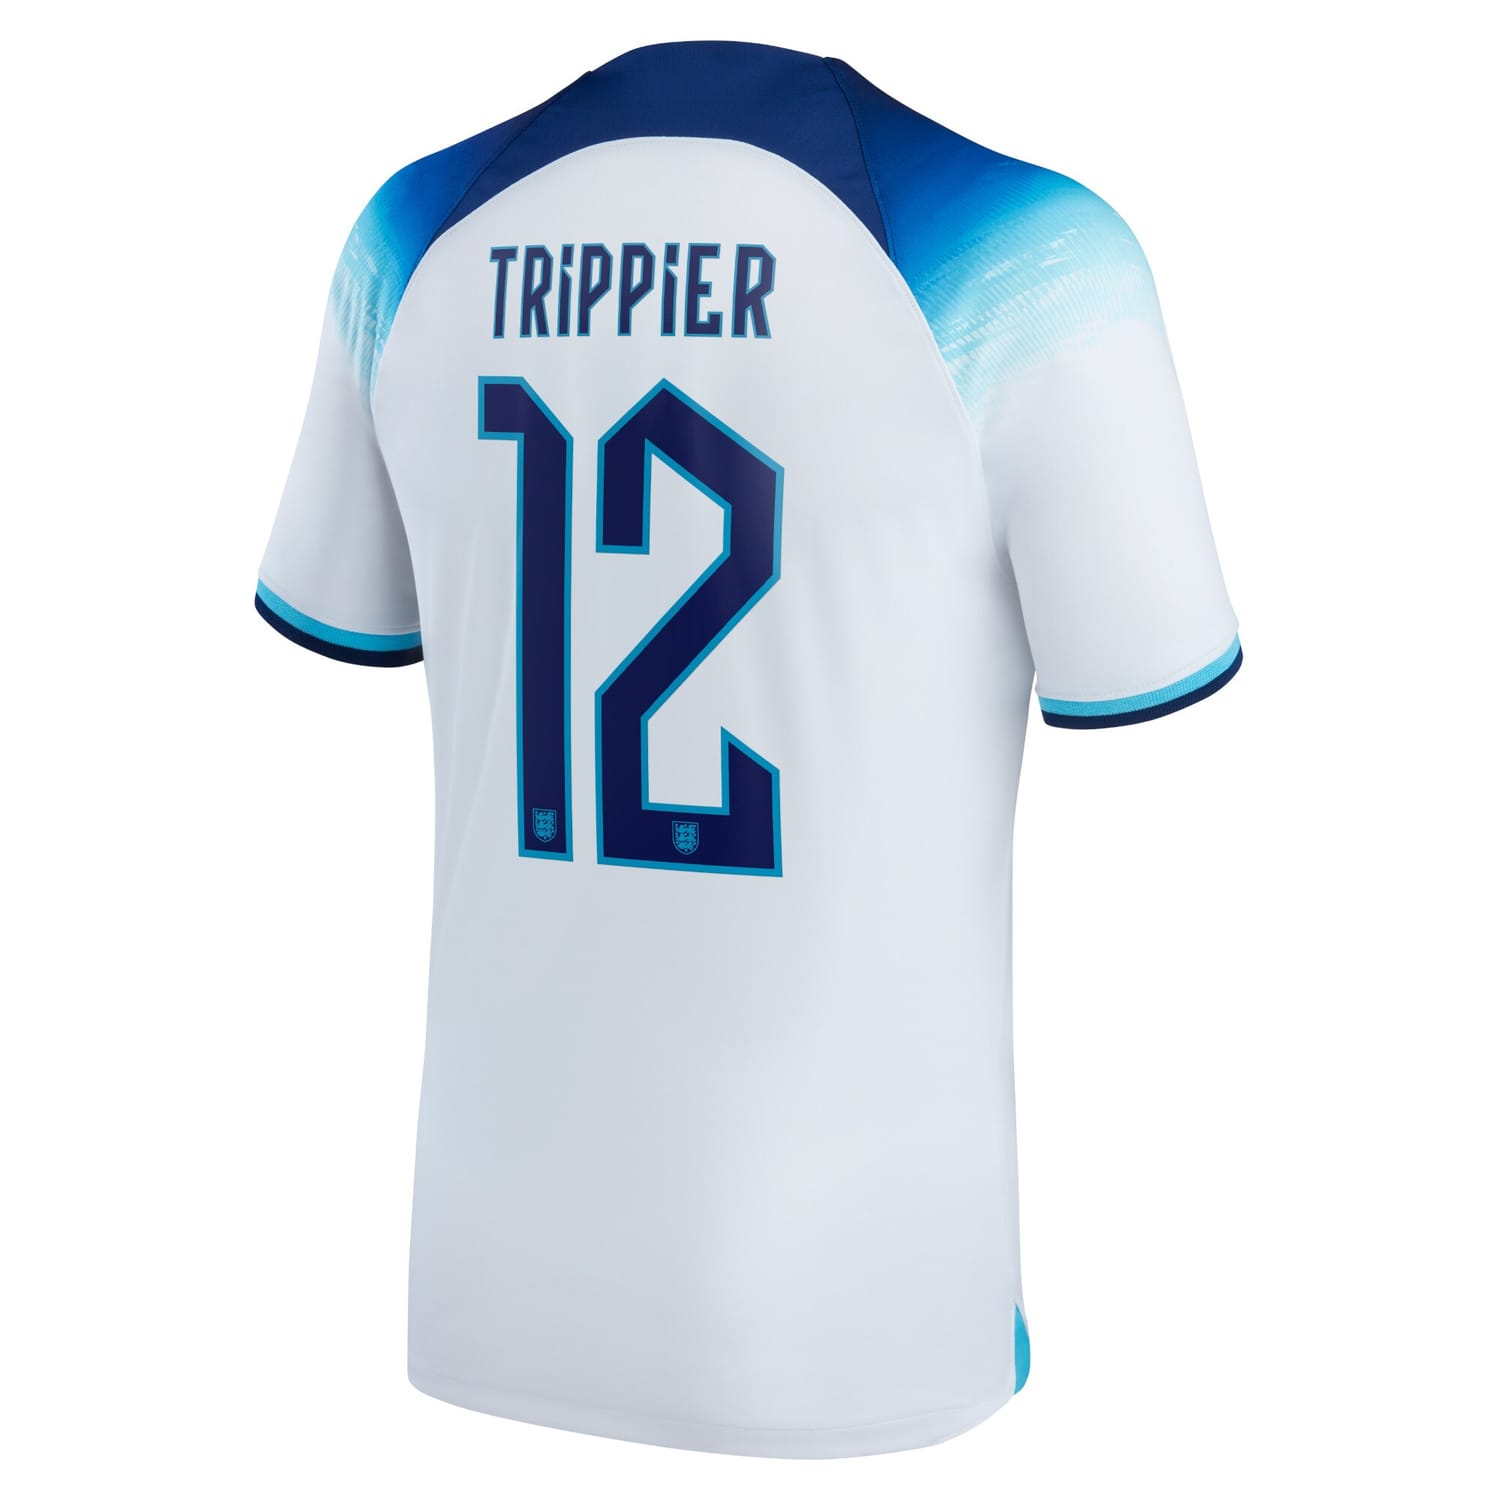 England National Team Home Jersey Shirt 2022 player Kieran Trippier 12 printing for Men